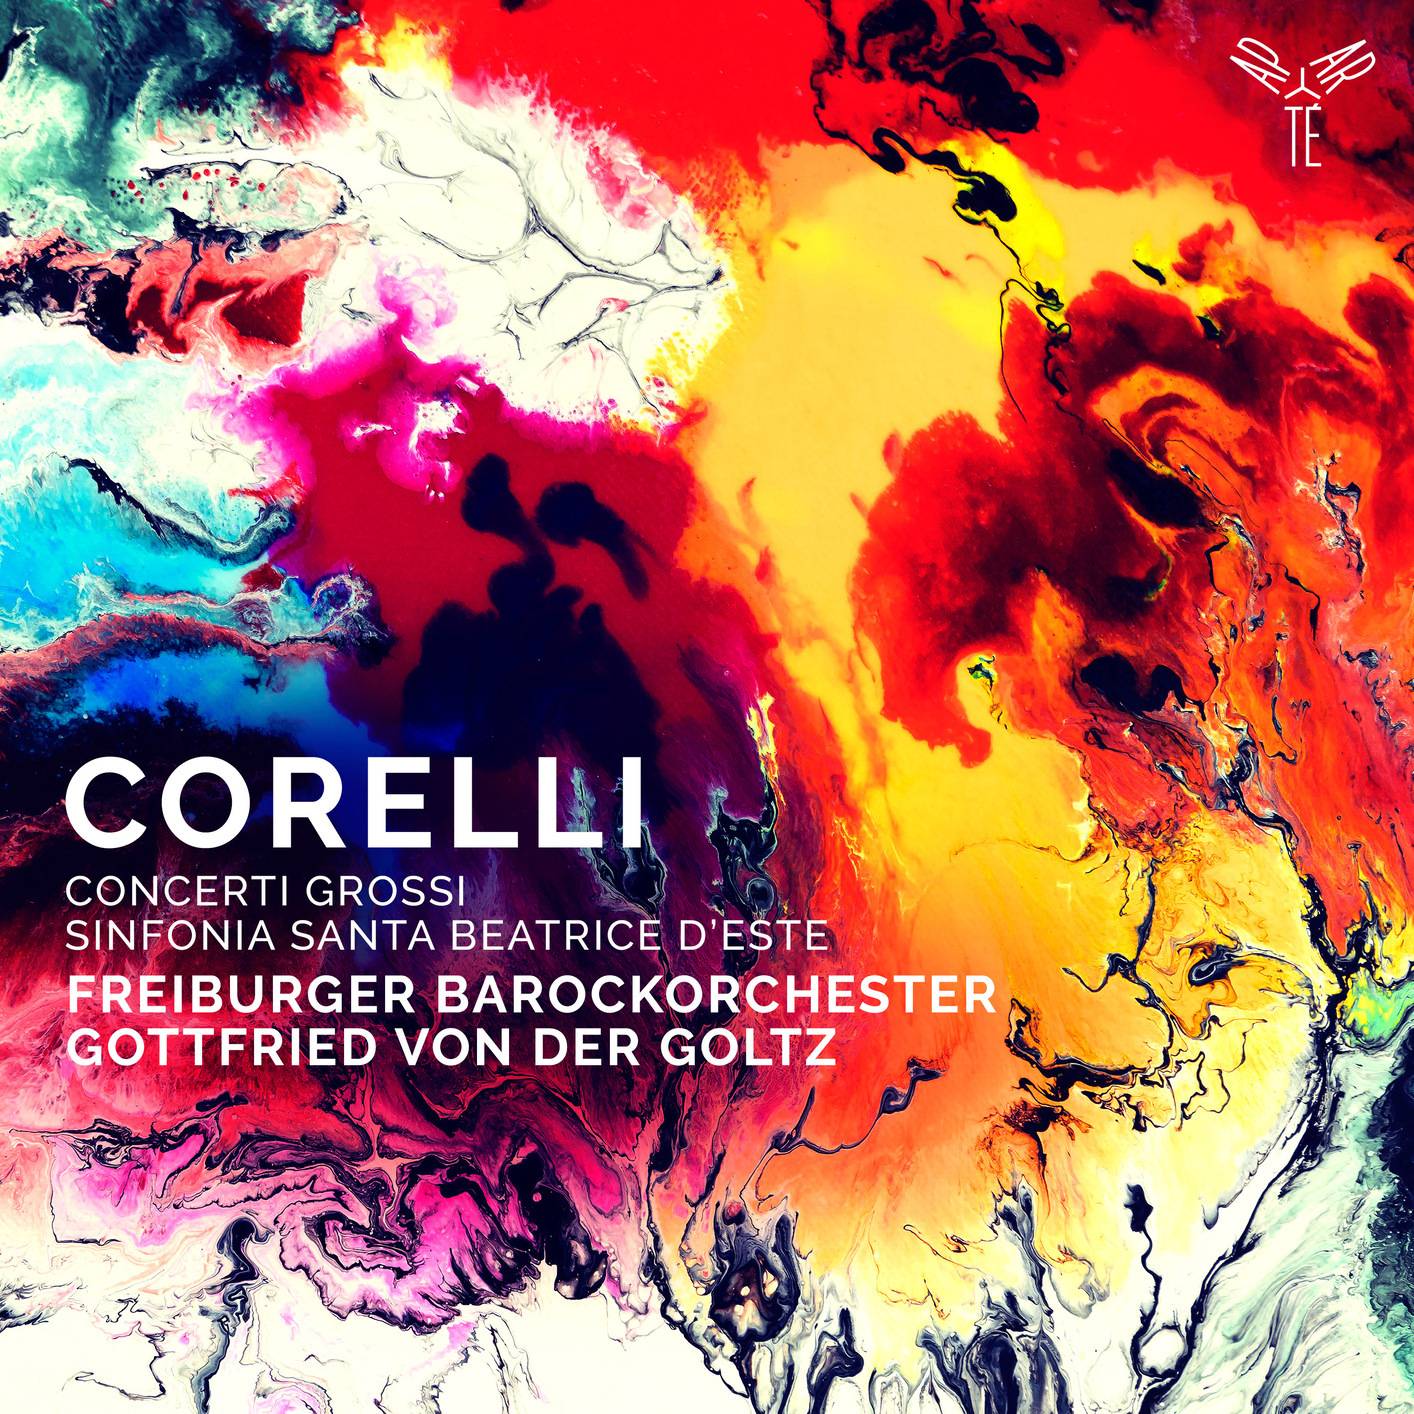 Freiburger Barockorchester - Corelli: Concerti Grossi, Sinfonia to Santa Beatrice d’Este (2018) [FLAC 24bit/96kHz]